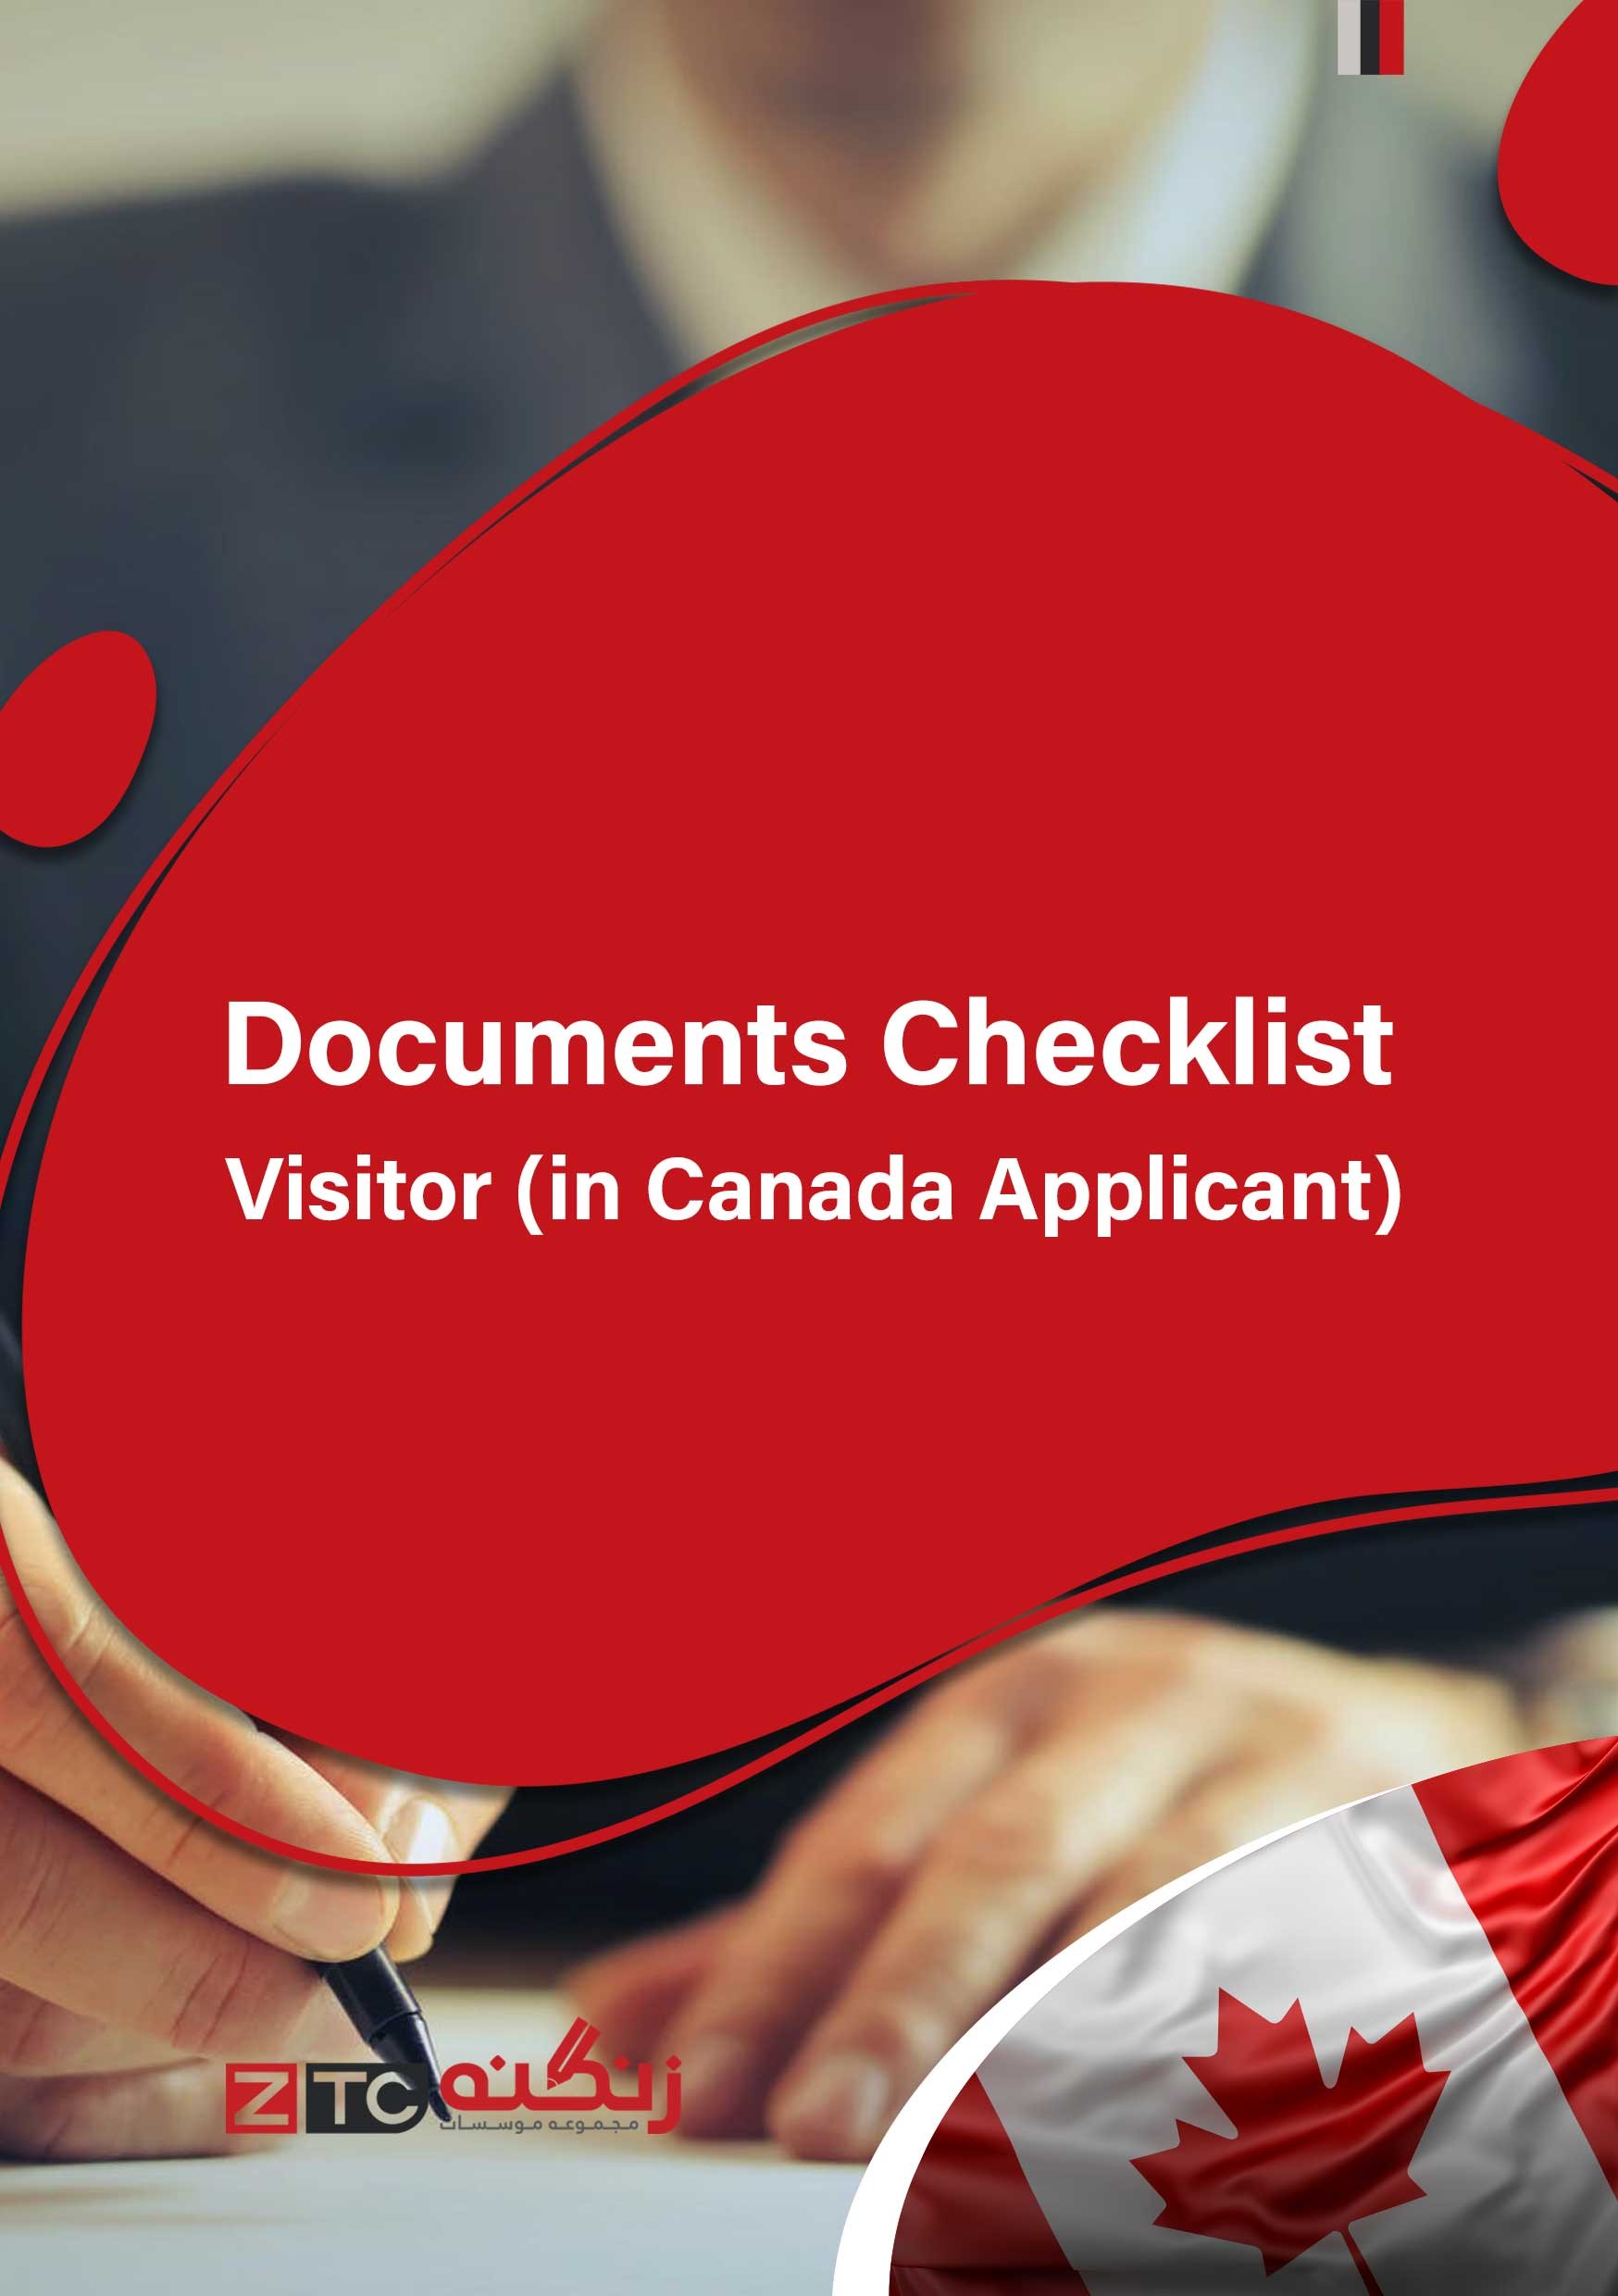 Documents Checklist - Visitor (in Canada Applicant)